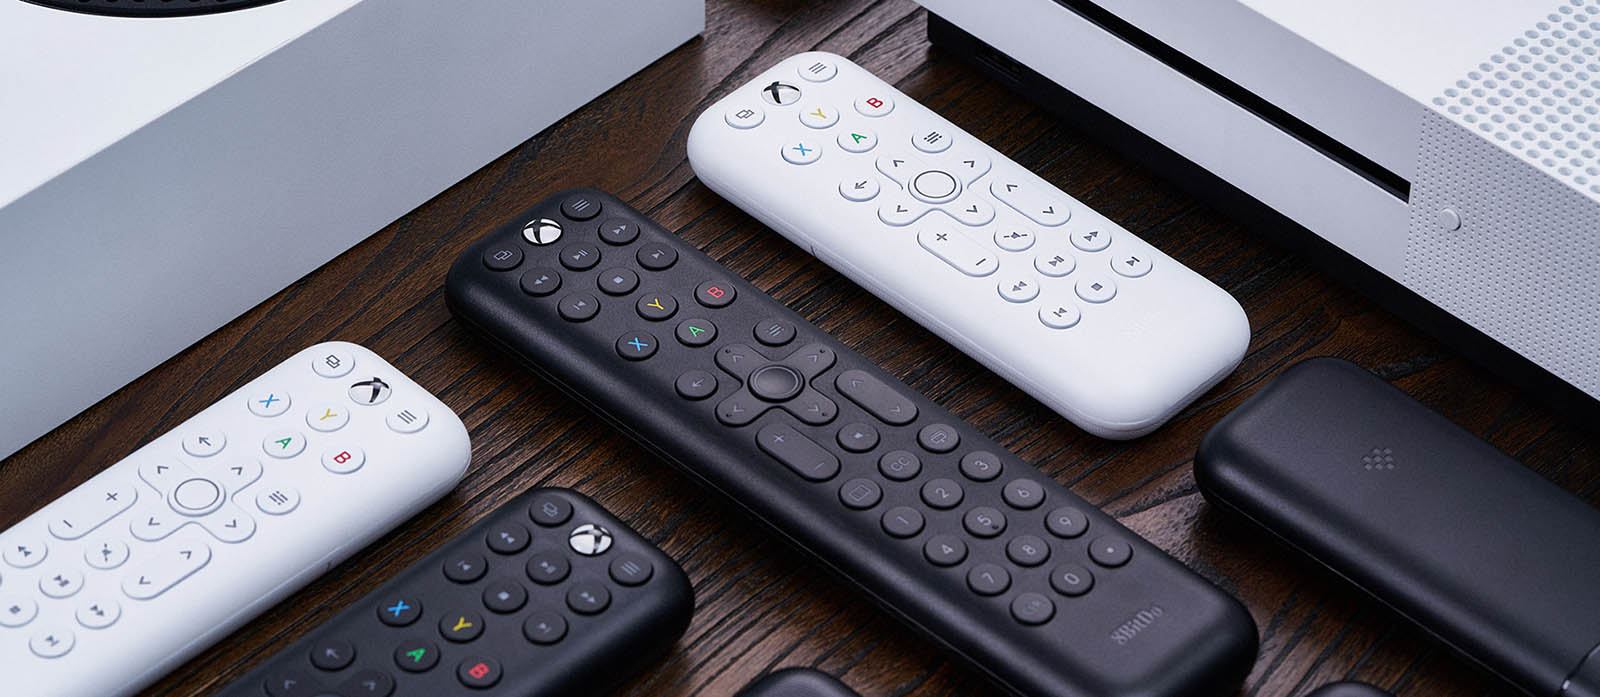 8BitDo Announces a Pair of Media Remotes for Xbox Consoles